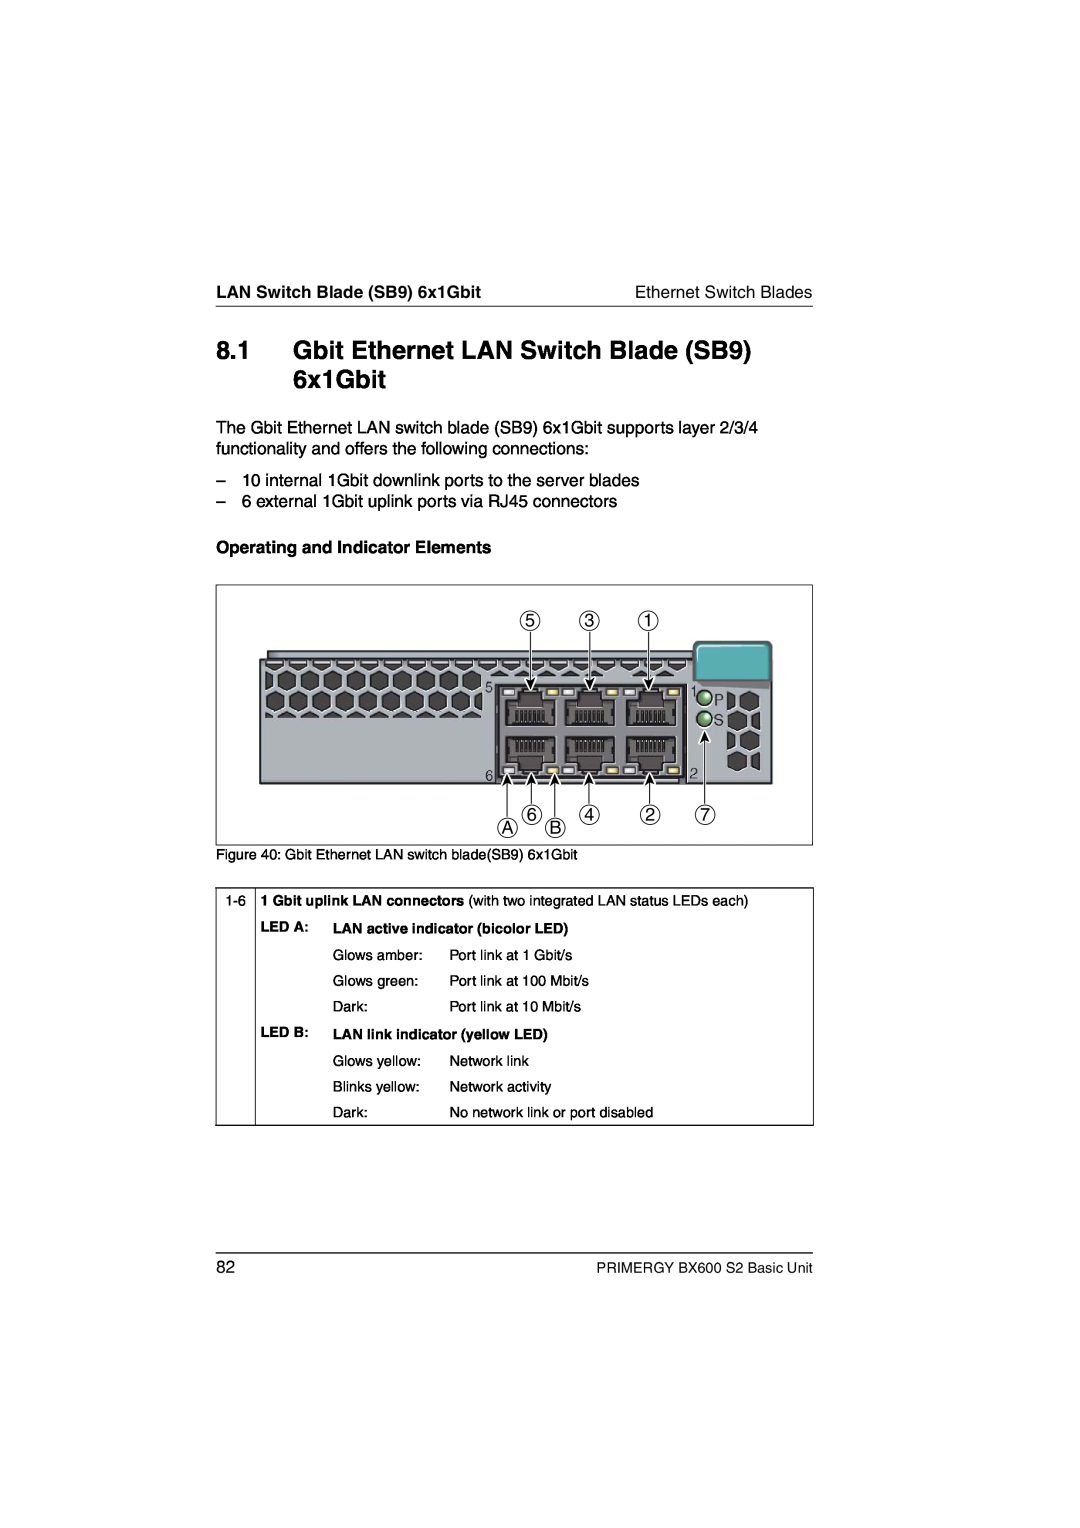 Fujitsu BX600 S2 Gbit Ethernet LAN Switch Blade SB9 6x1Gbit, Operating and Indicator Elements, Ethernet Switch Blades 